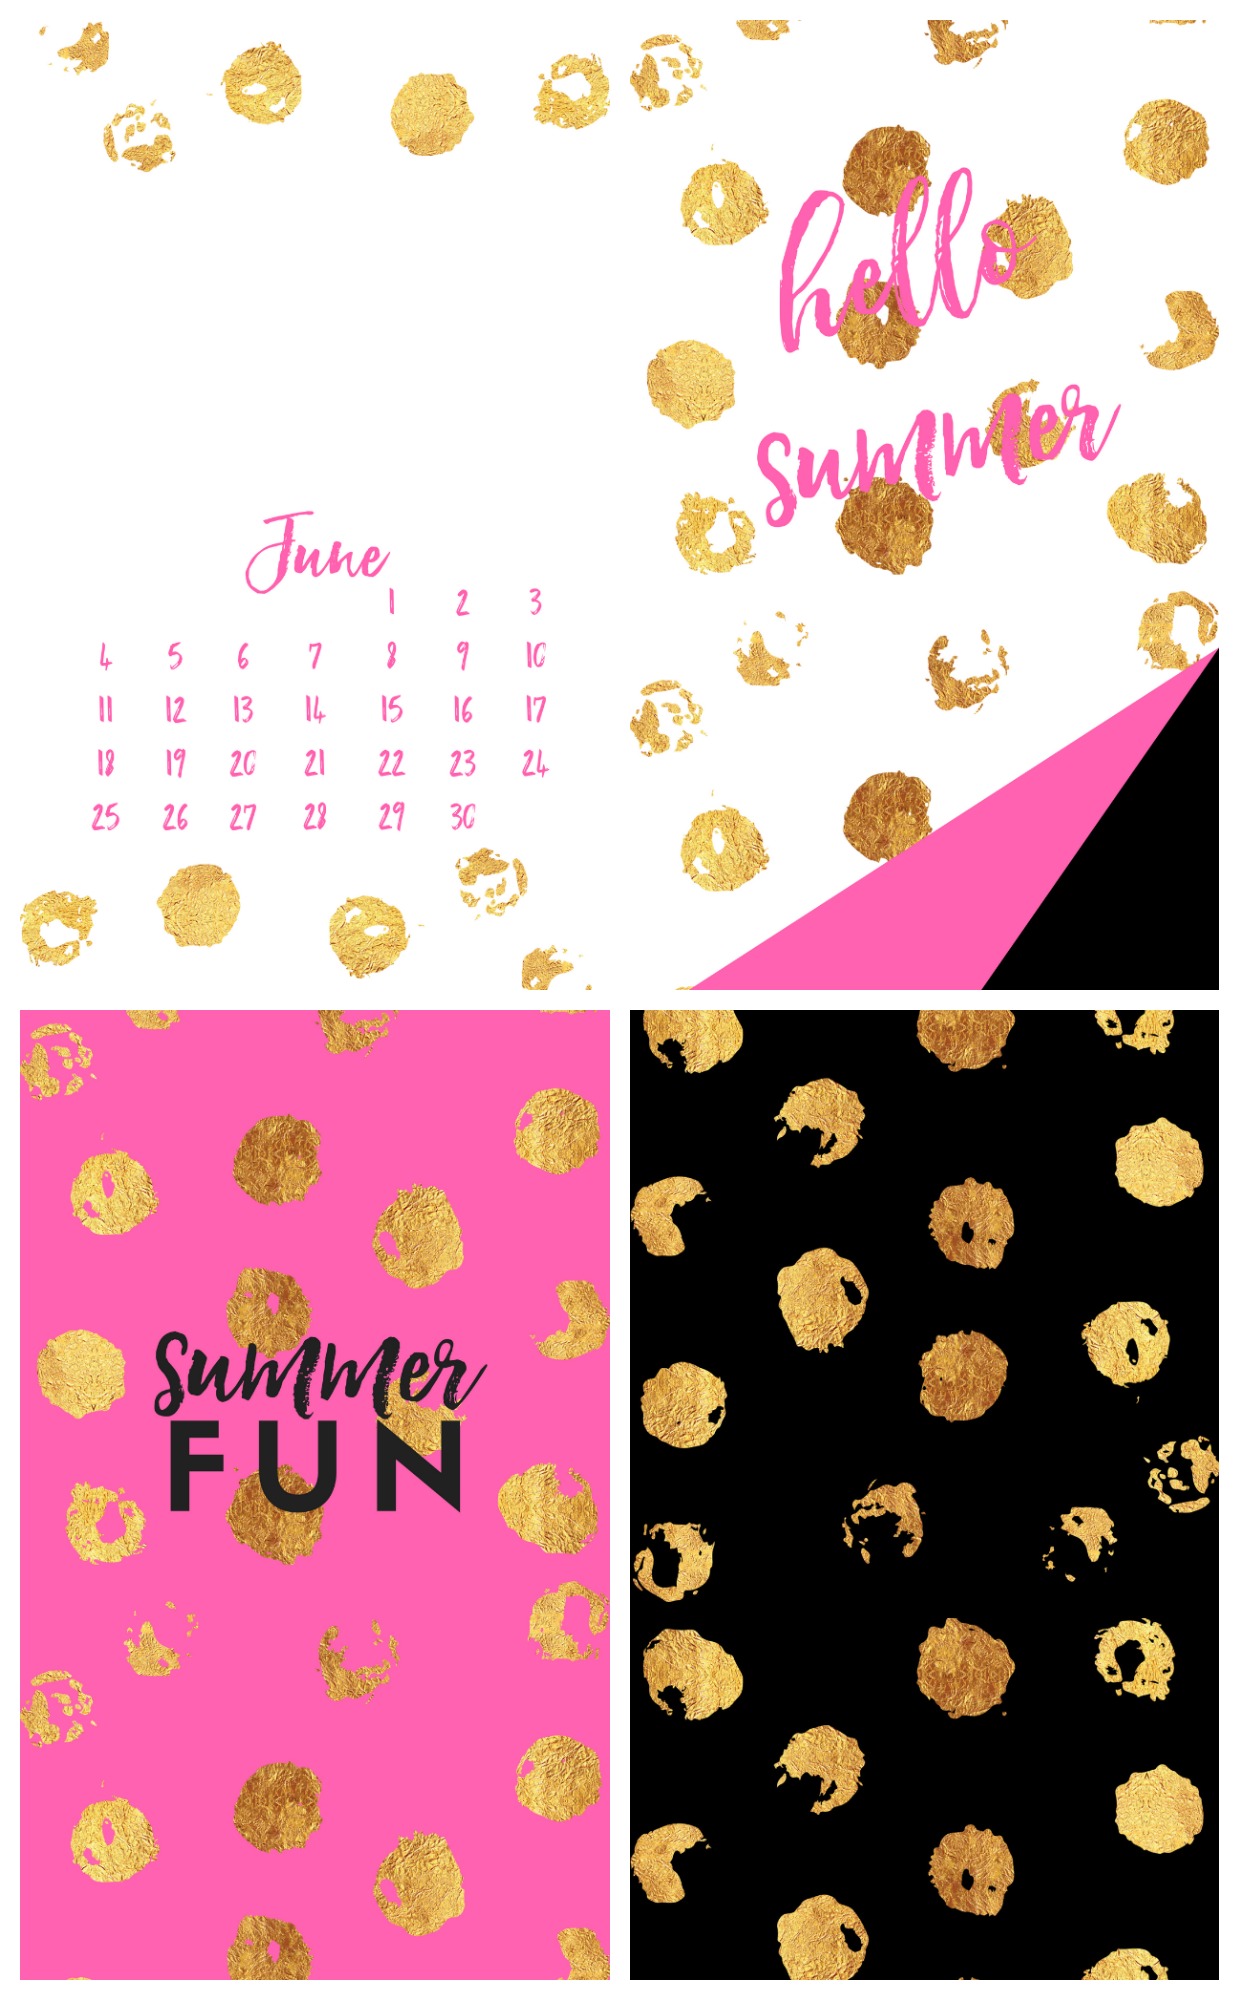 June Smart Phone Wallpapers Kid Kin Hd Wallpaper Backgrounds Download